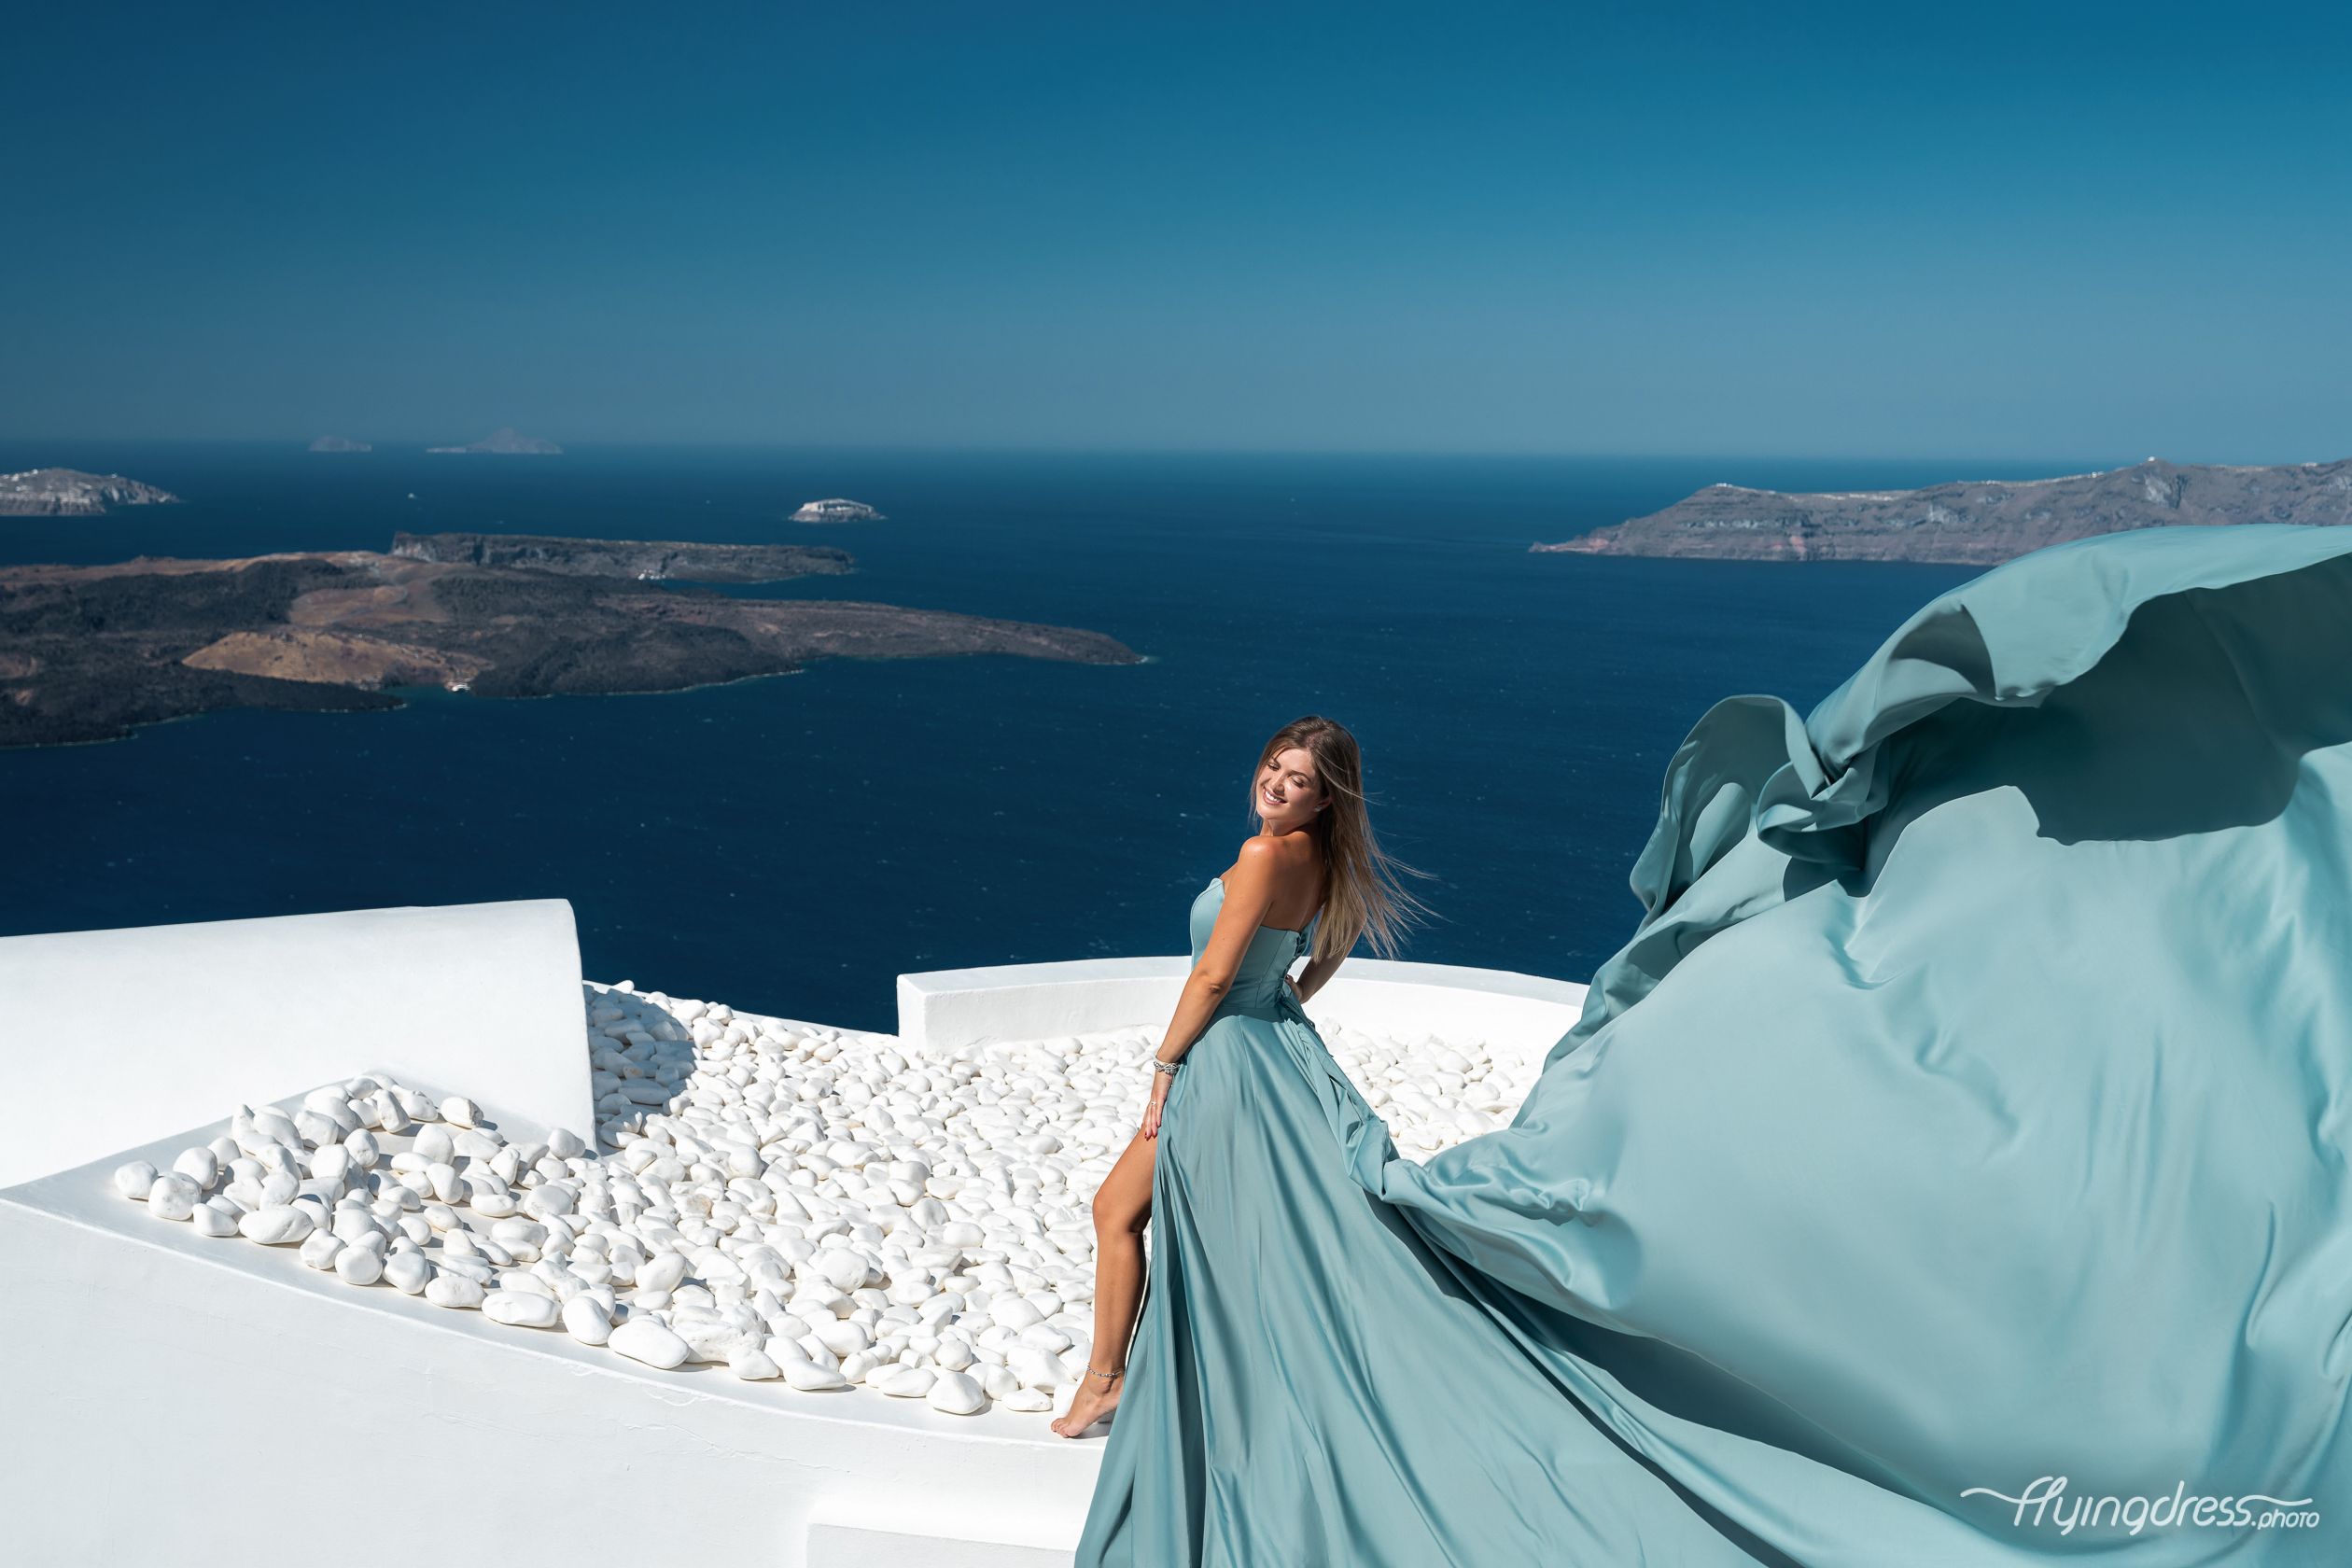 Santorini flying dress photoshoot with caldera view